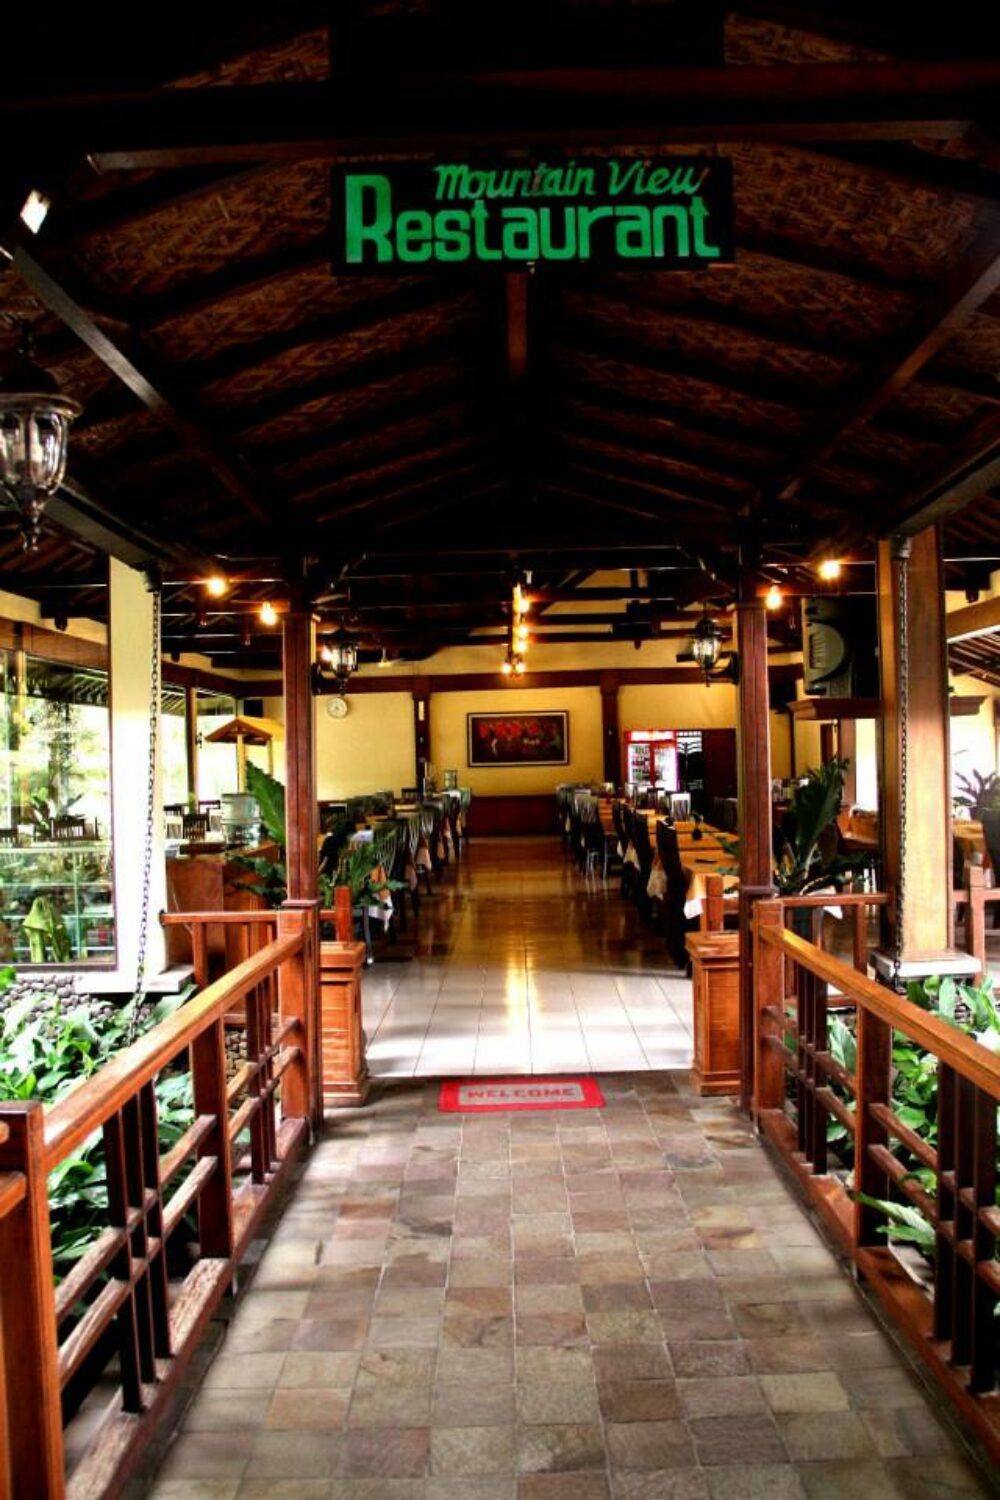 Kalibaru Cottages Banyuwangi Rondreis Indonesia Vakantie Original Asia